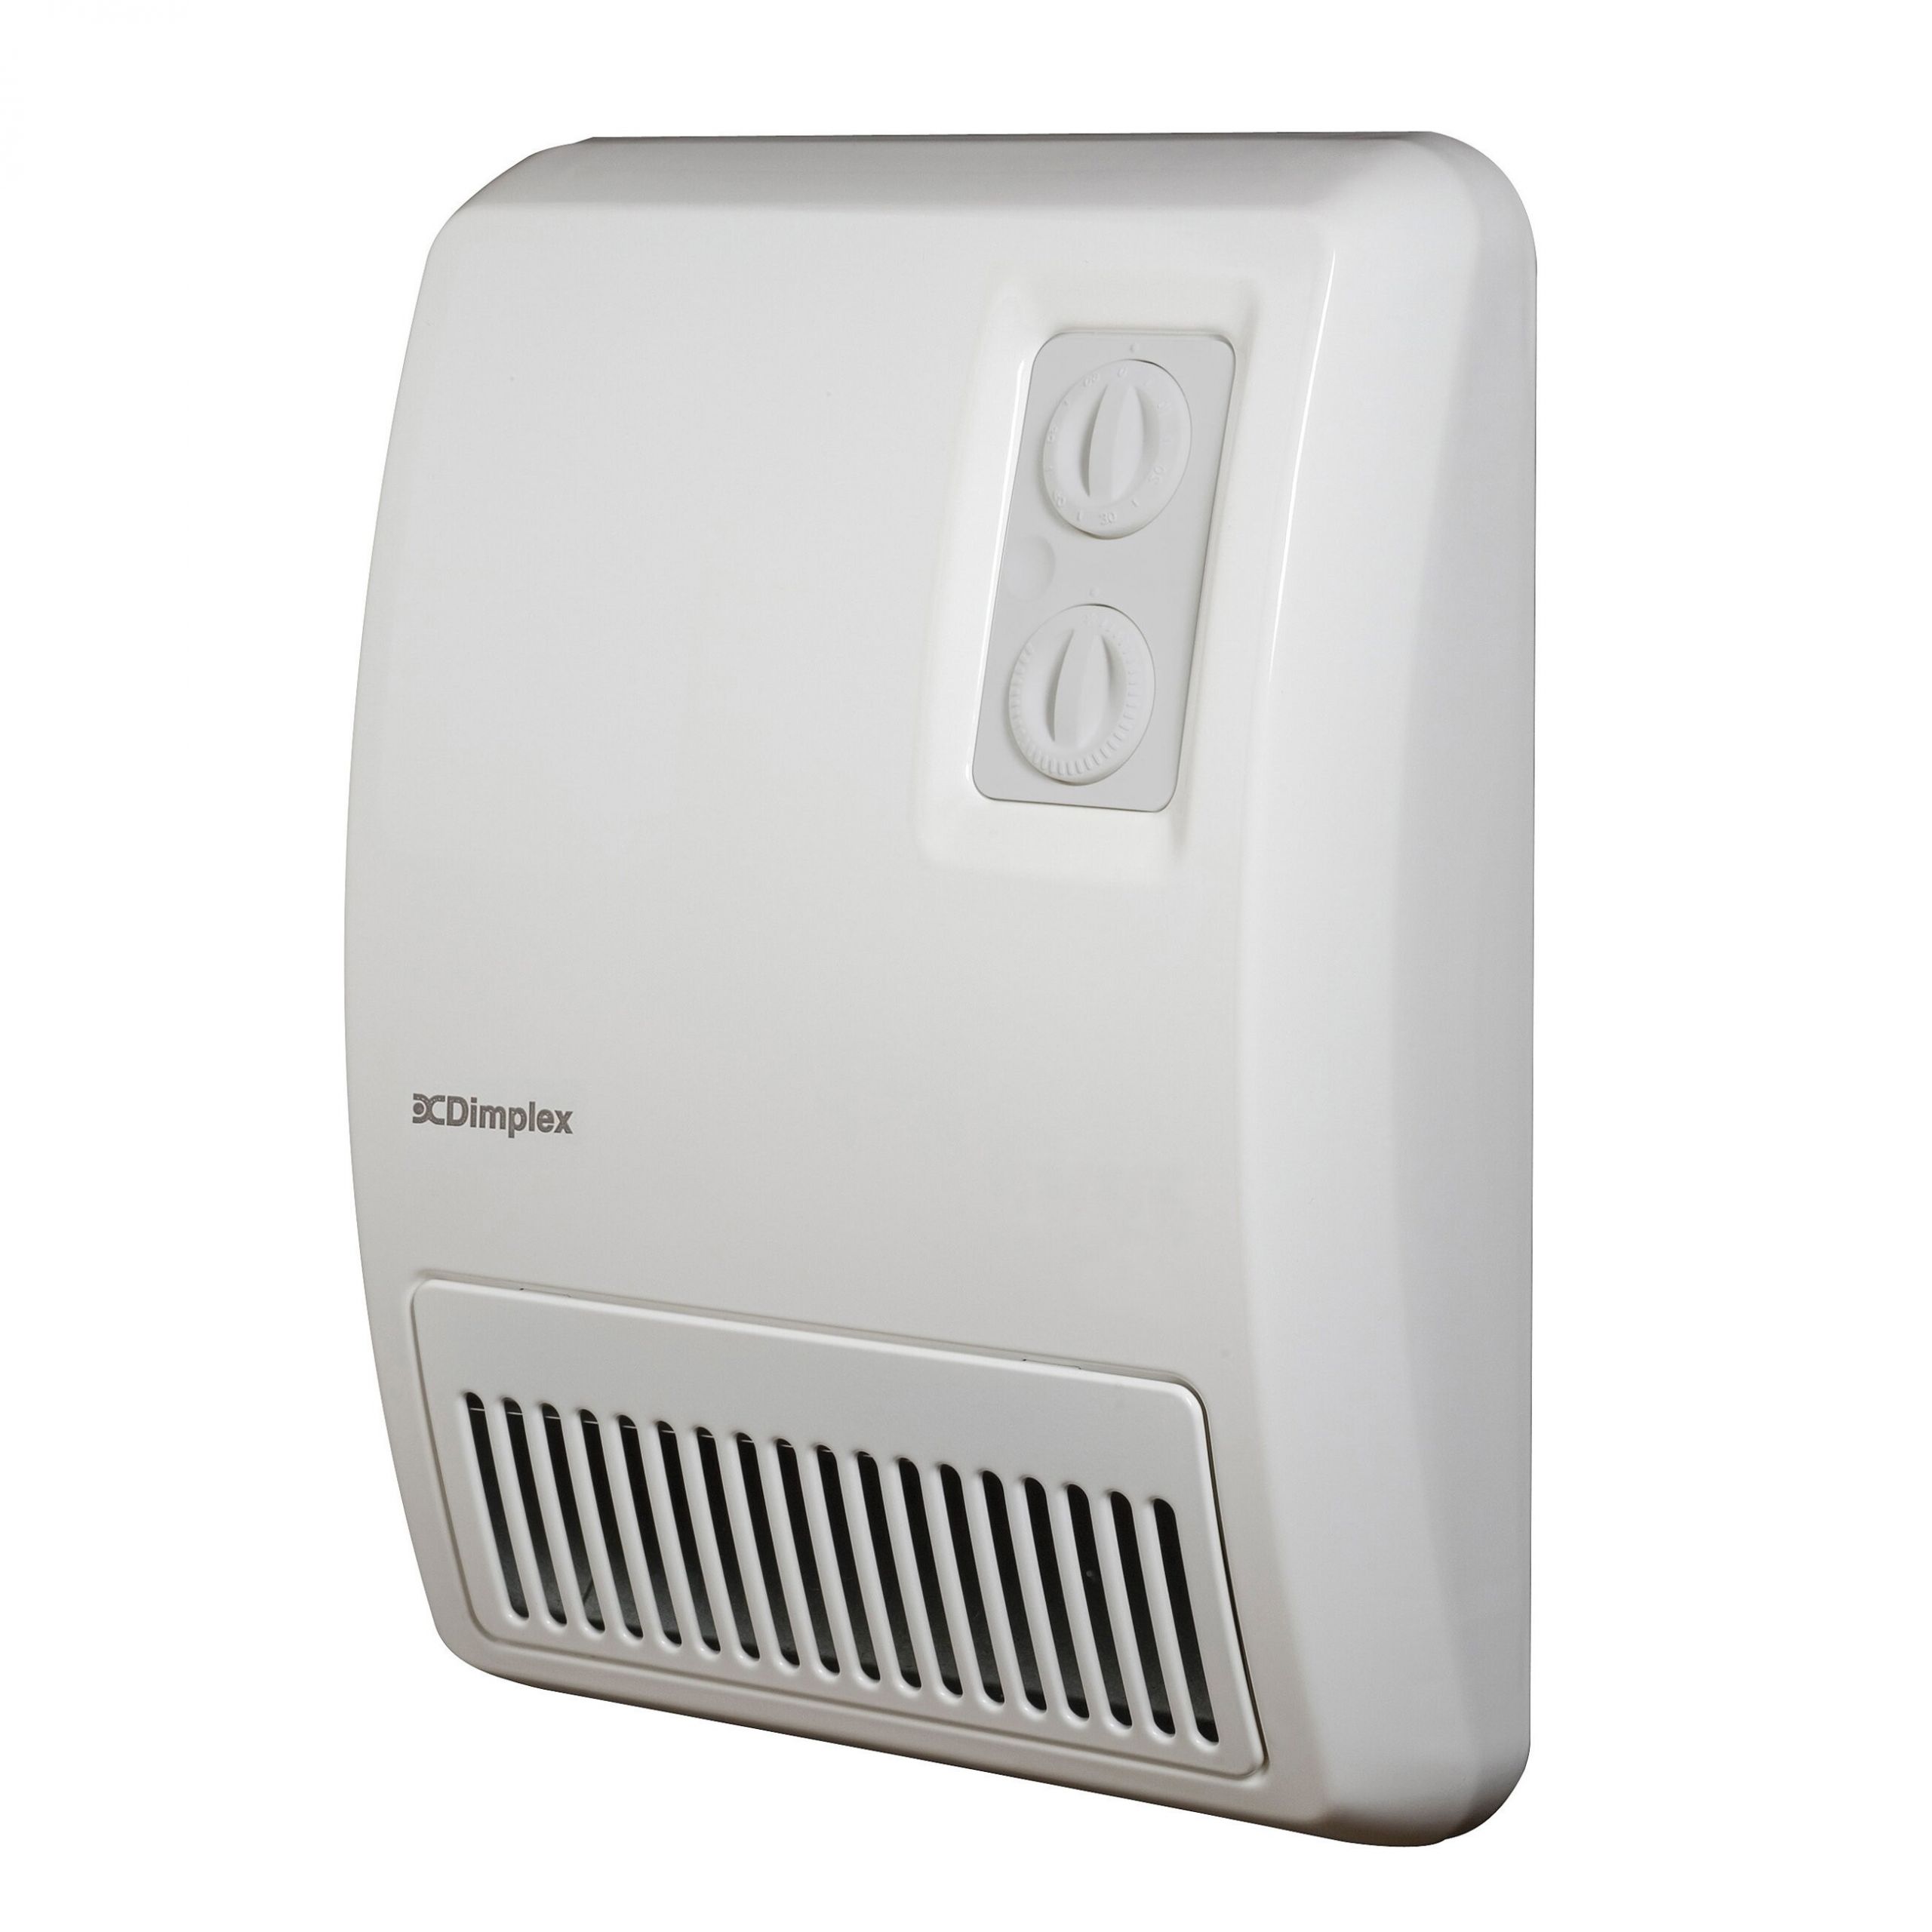 Electric Bathroom Heaters Wall Mounted
 Dimplex 3 413 BTU Wall Insert Electric Fan Heater